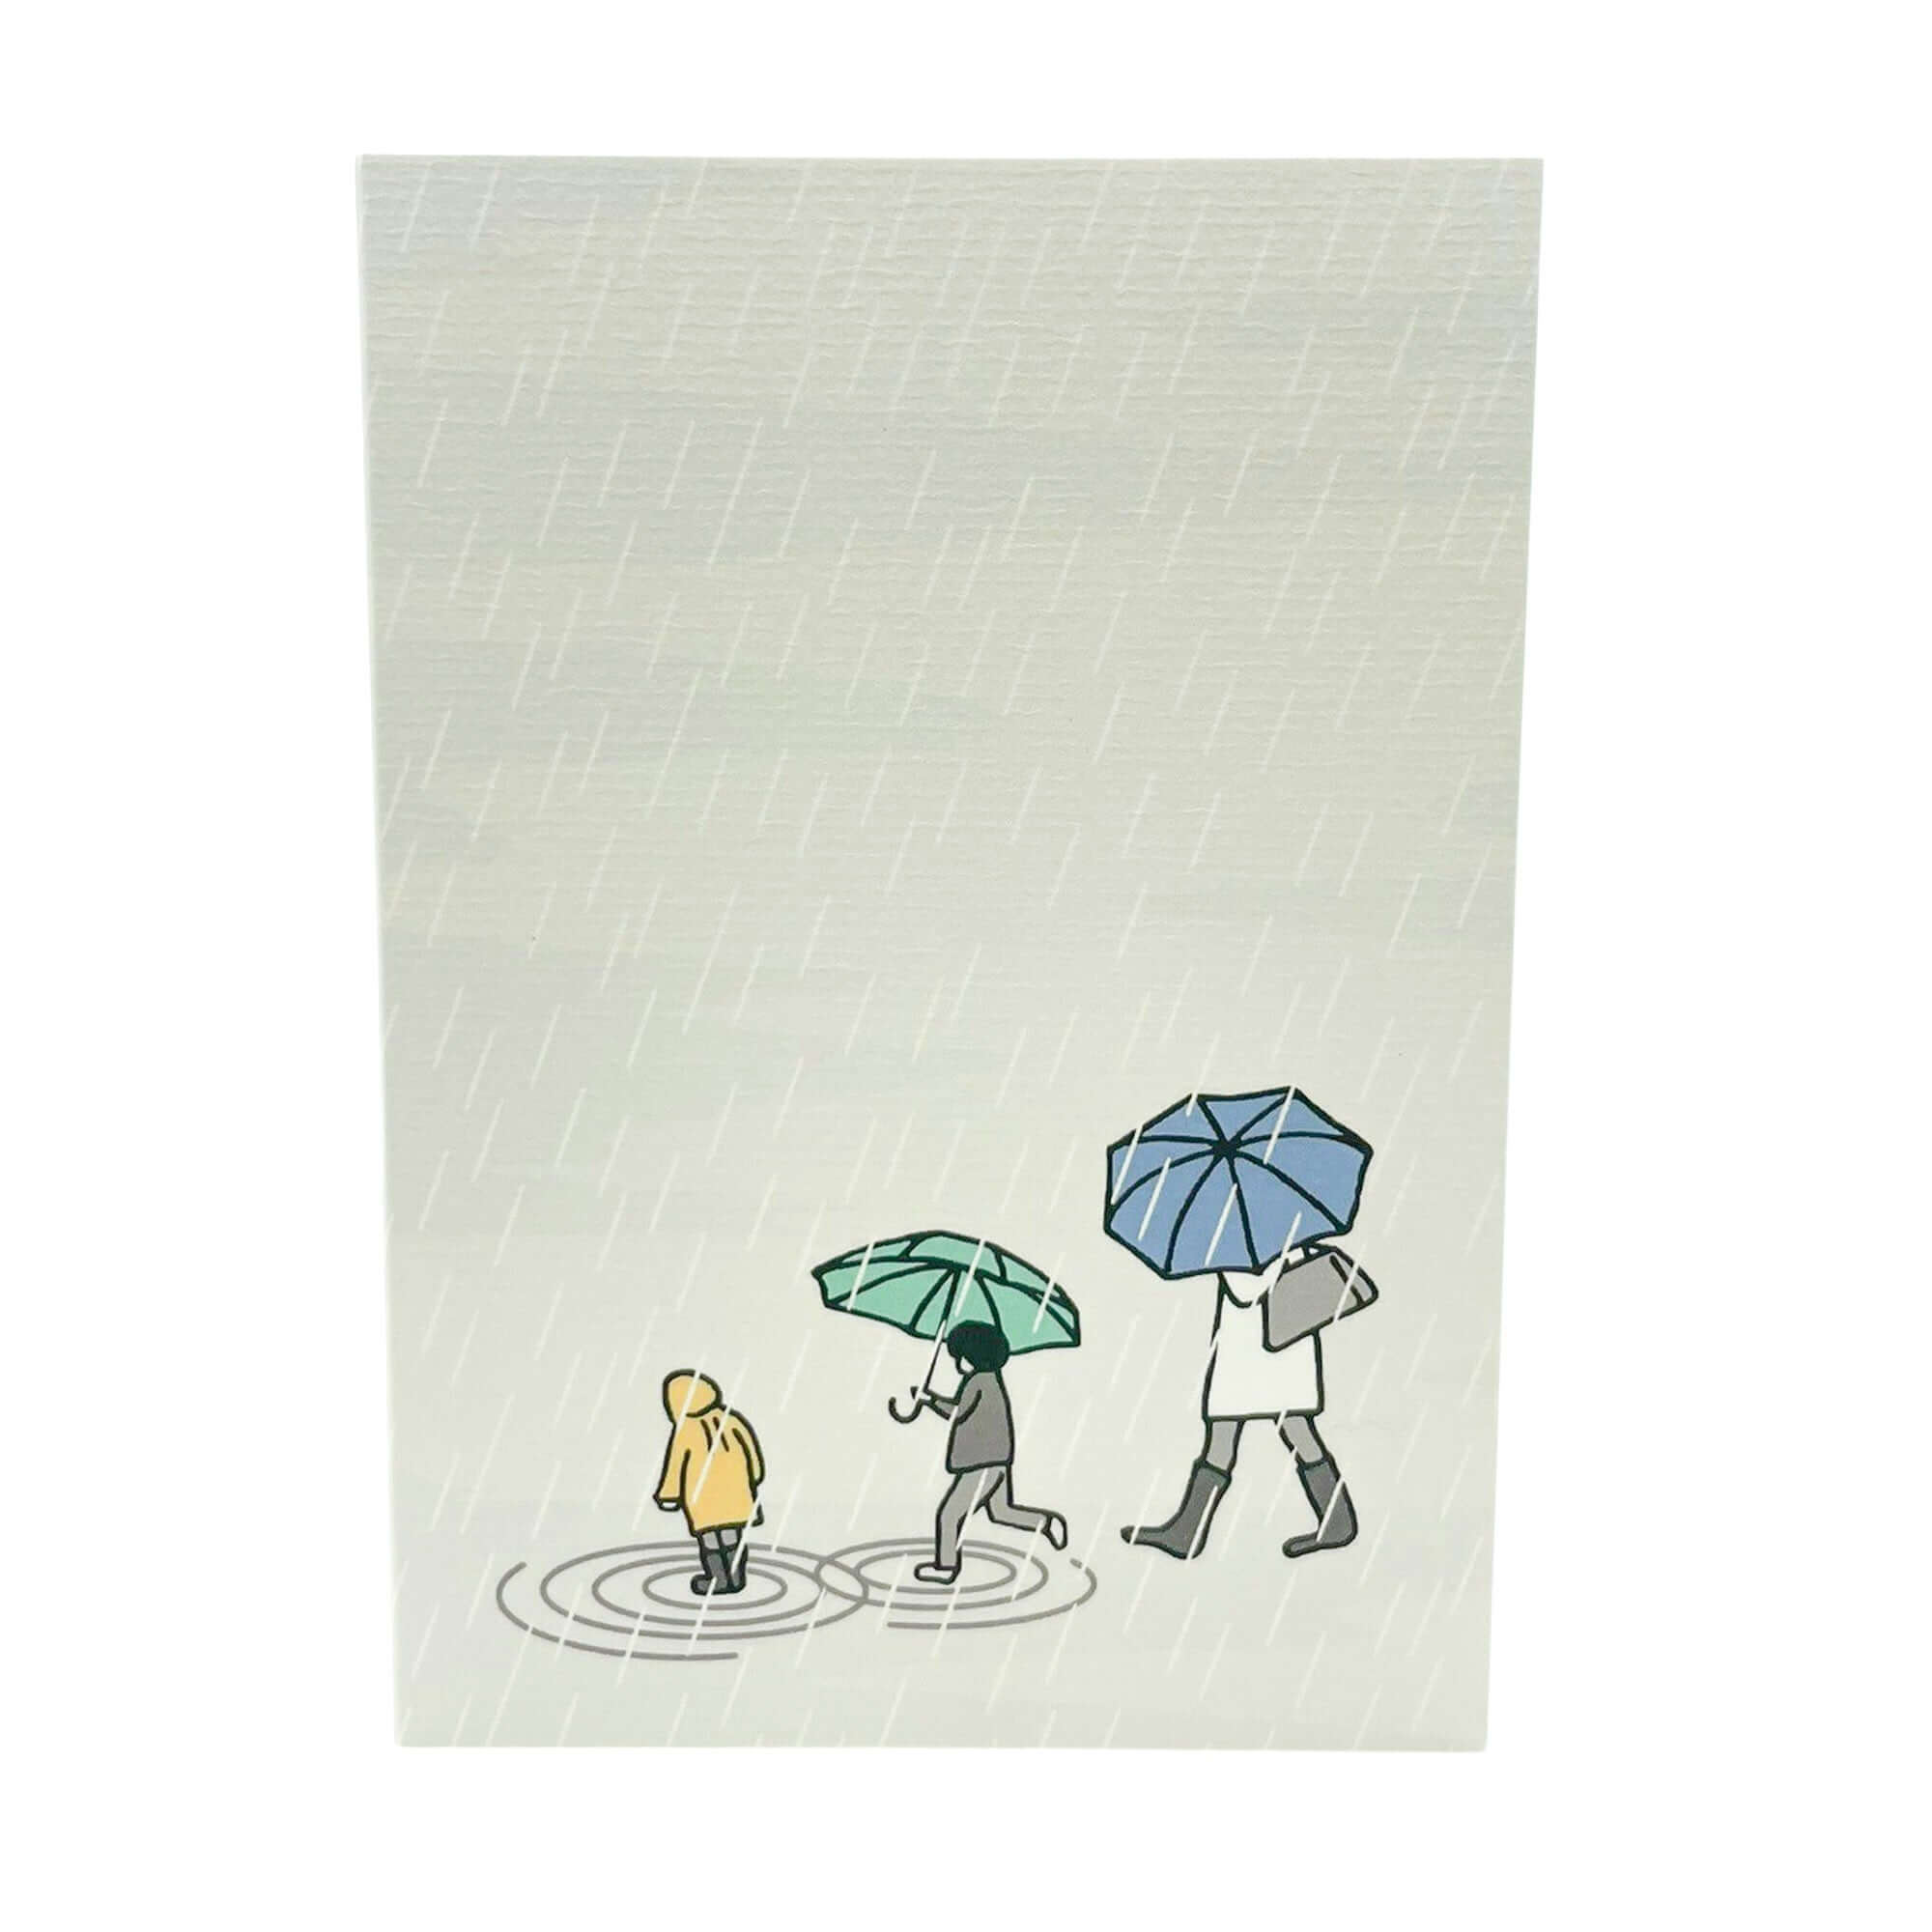 Rainy Day Greetings Card Greetings Card Mustard and Gray Ltd Shropshire UK